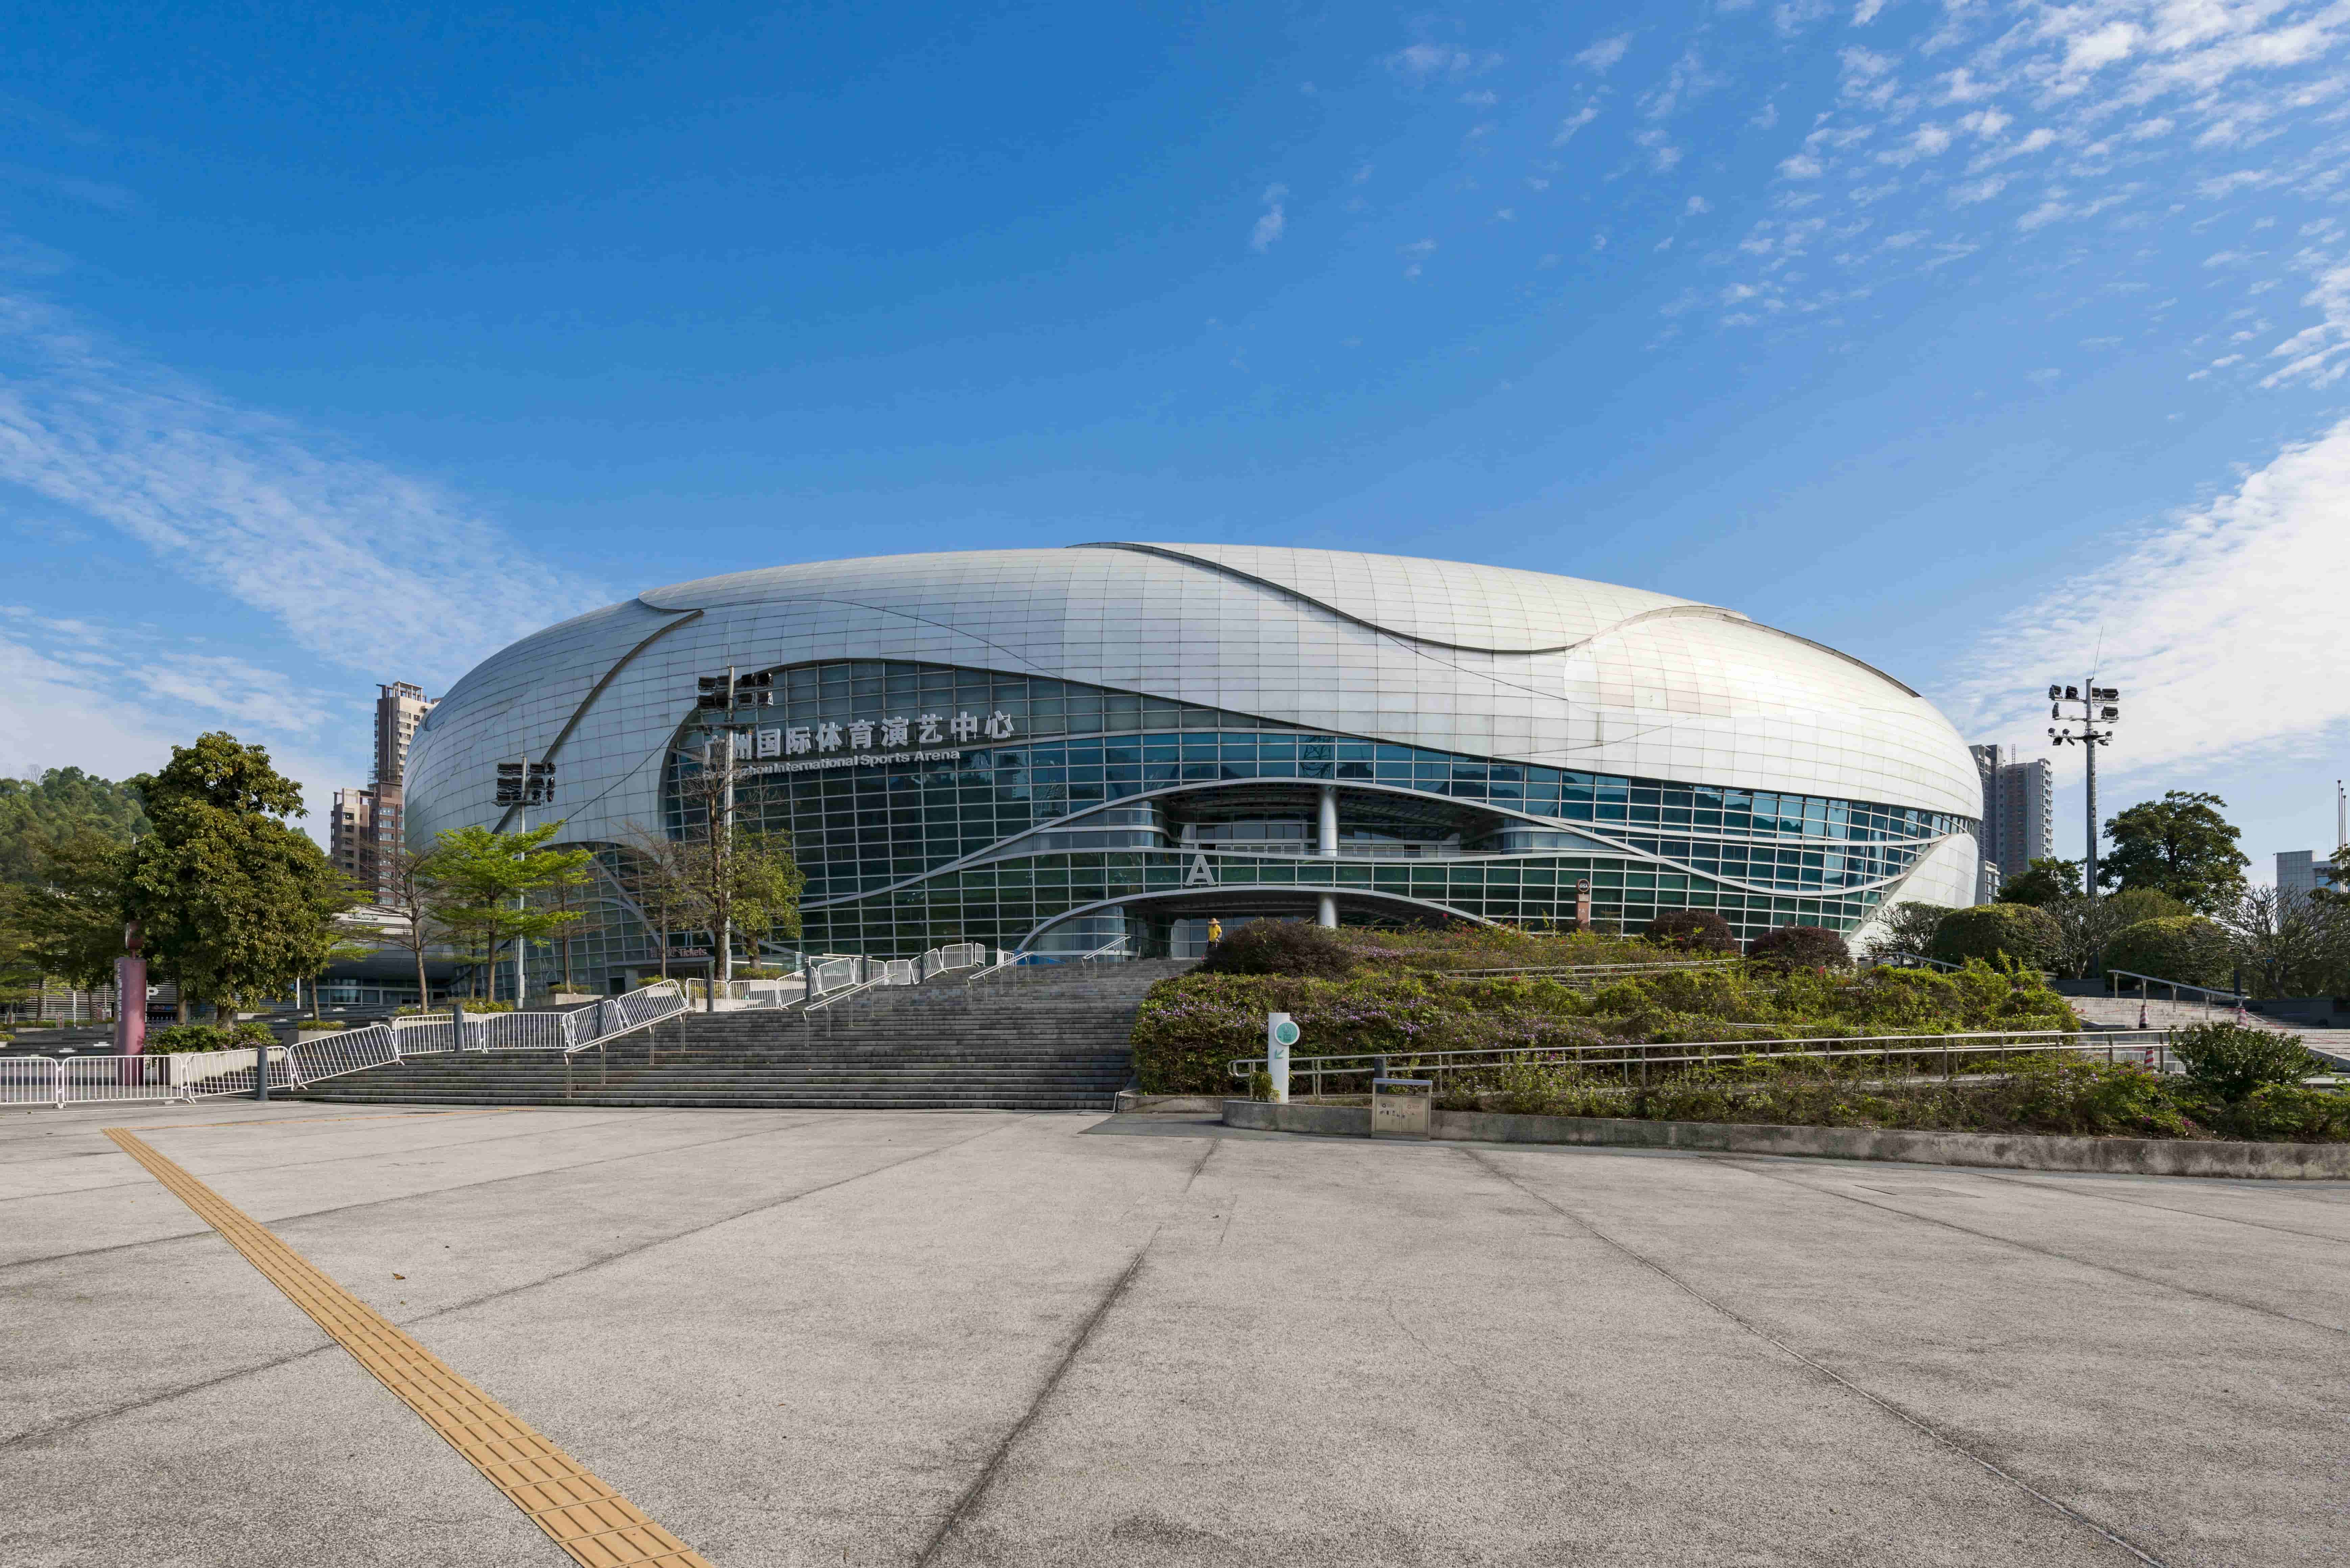 Baoneng International Sports Arena